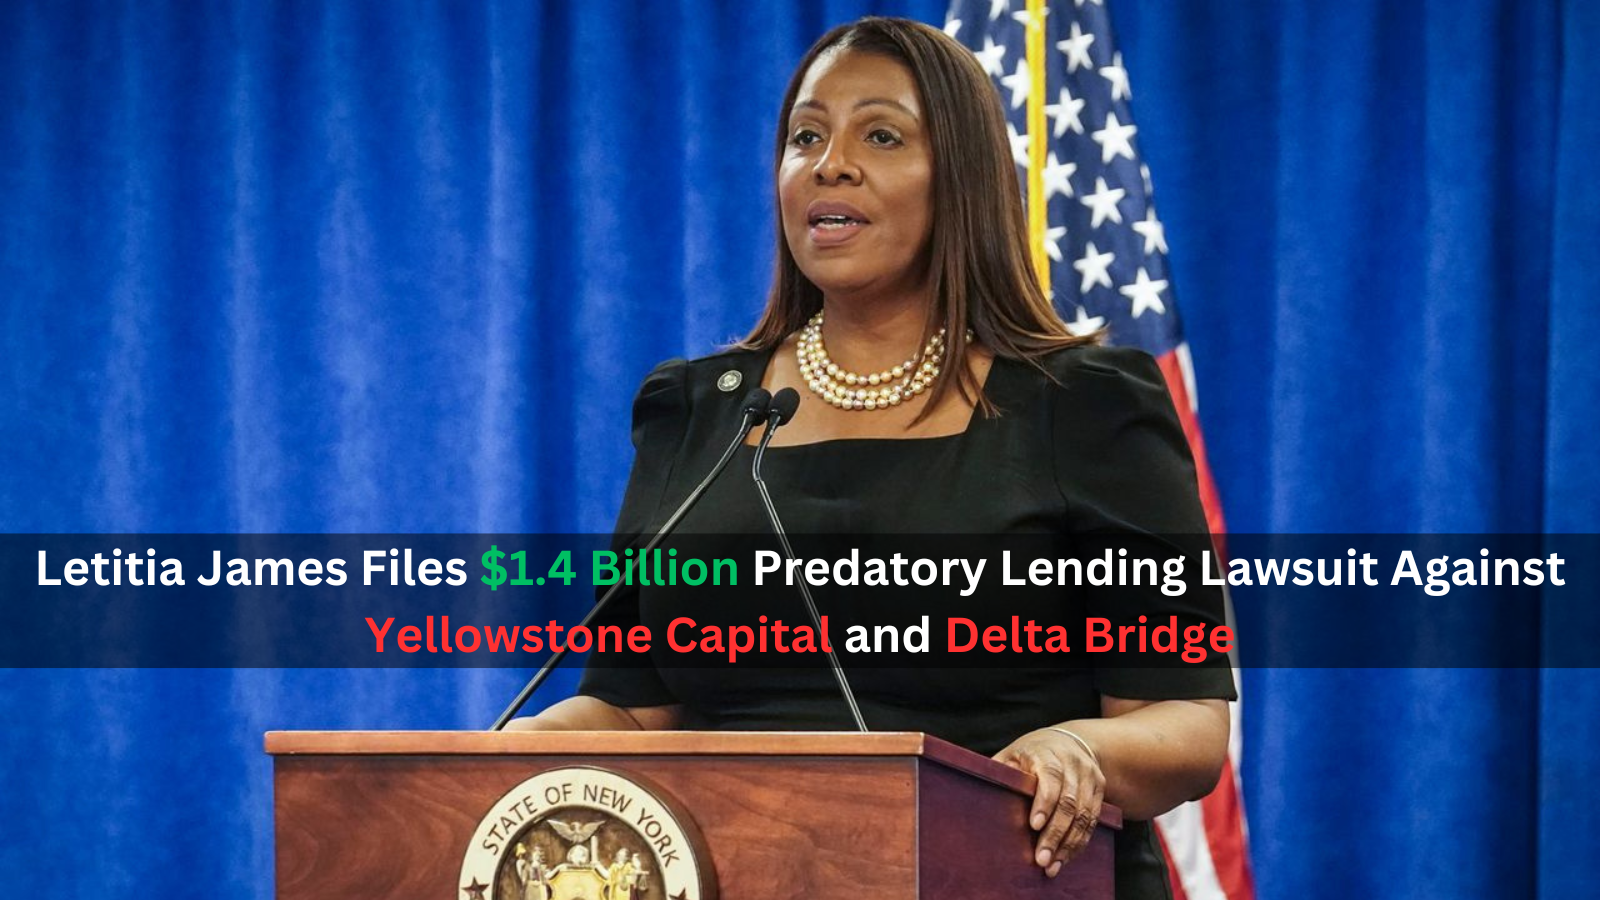 Letitia James Files $1.4 Billion Predatory Lending Lawsuit Against Yellowstone Capital and Delta Bridge